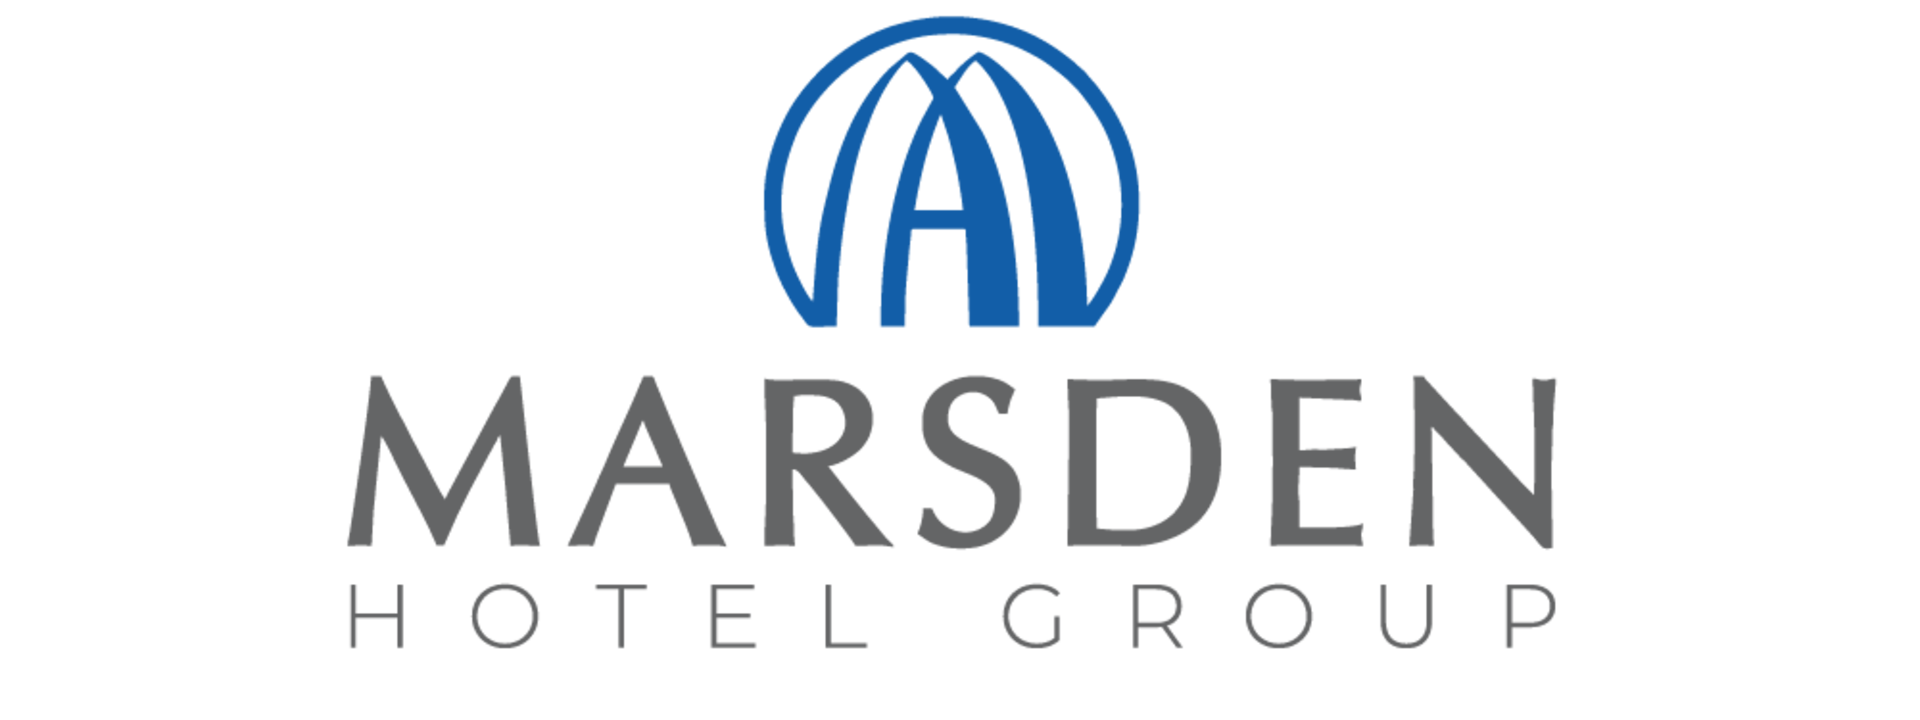 Marsden Hotel Group Logo - Windcave.png